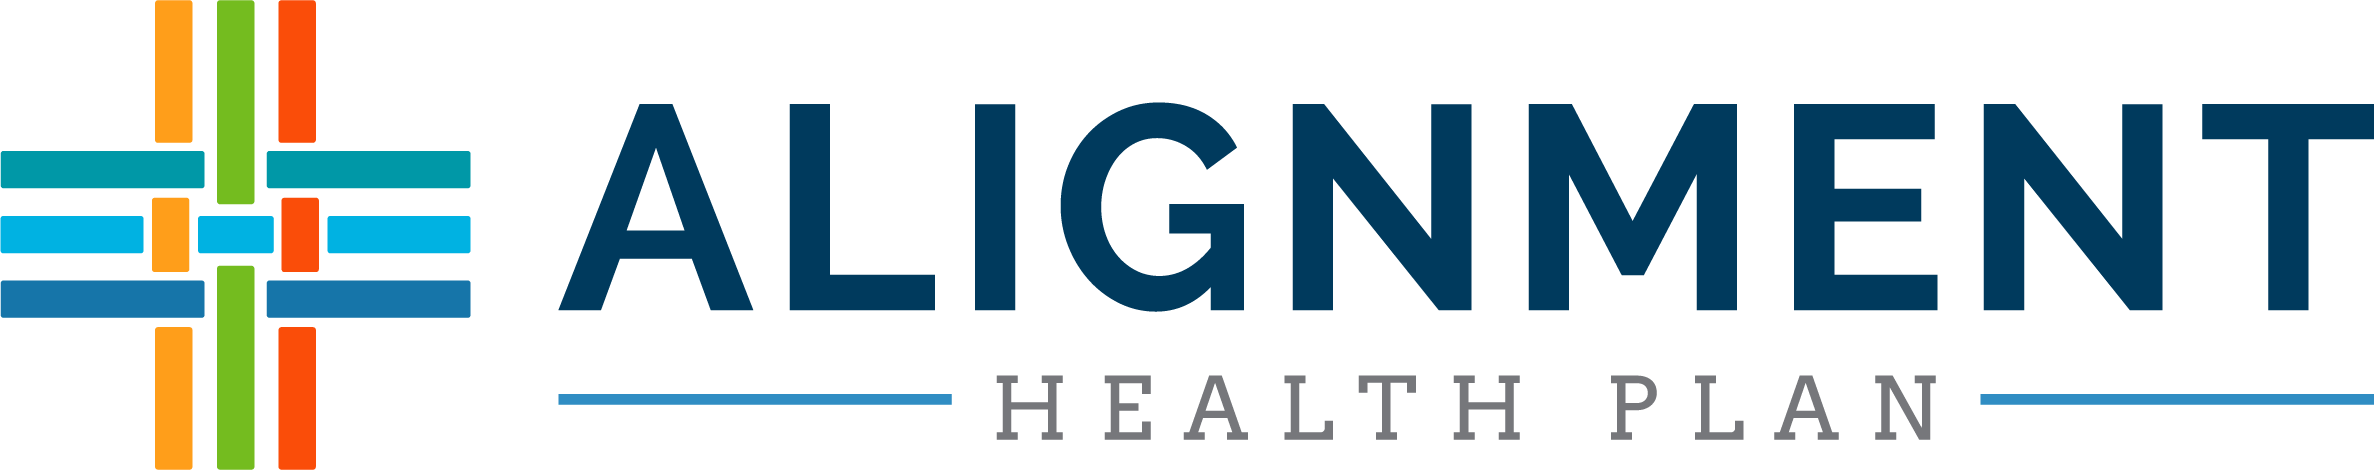 Alignment Health Plan company logo